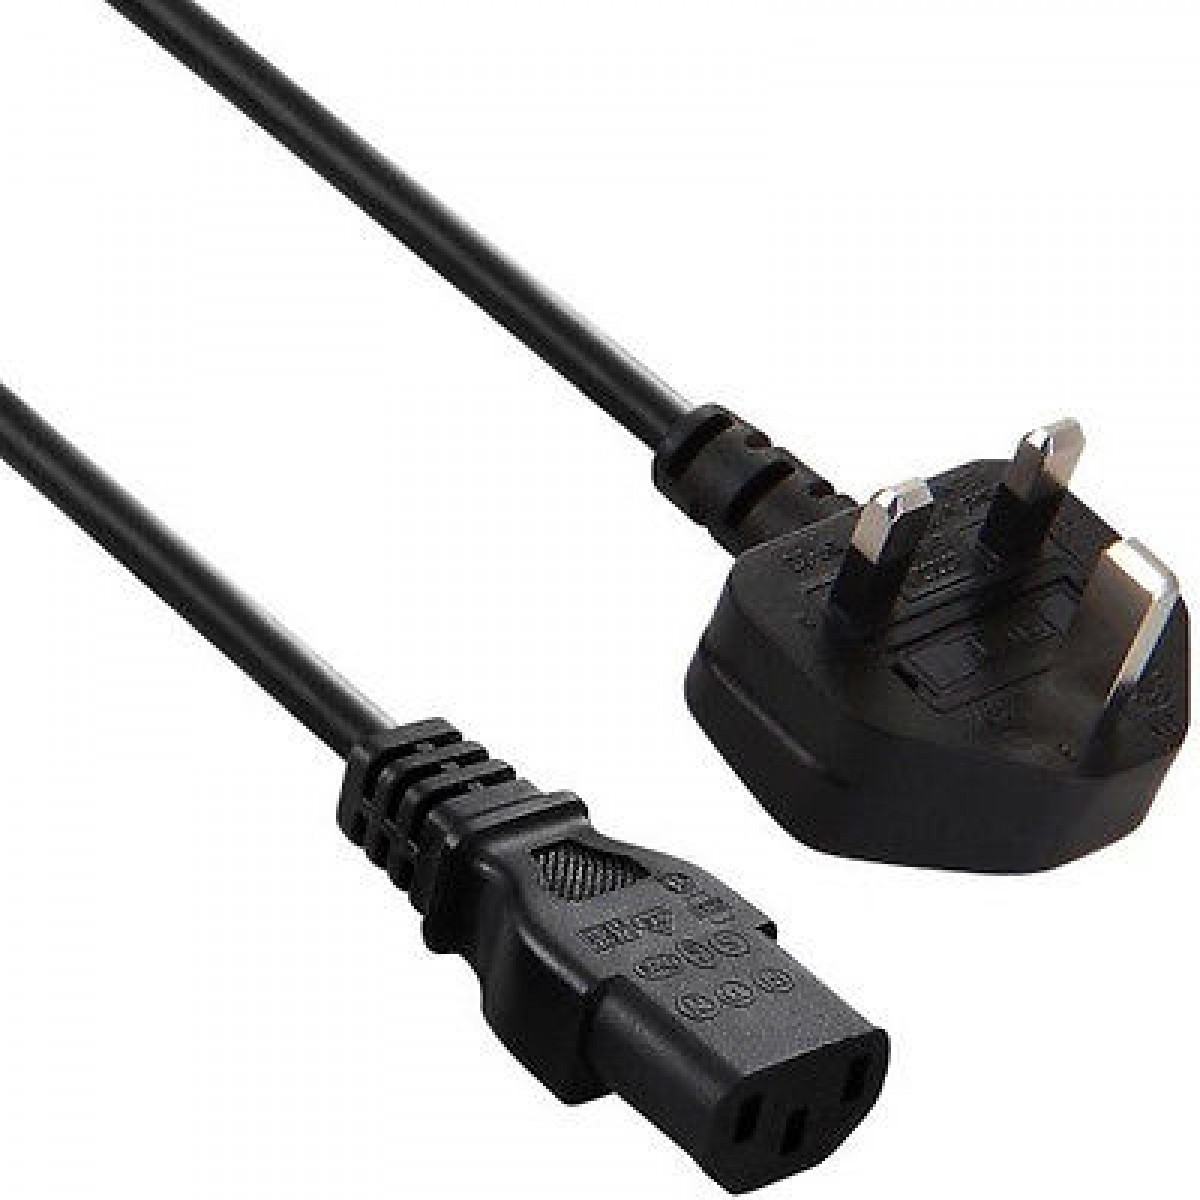 Uk Ac Adapter Power Cord For Samsung Ml 2165w Printer Keple Com